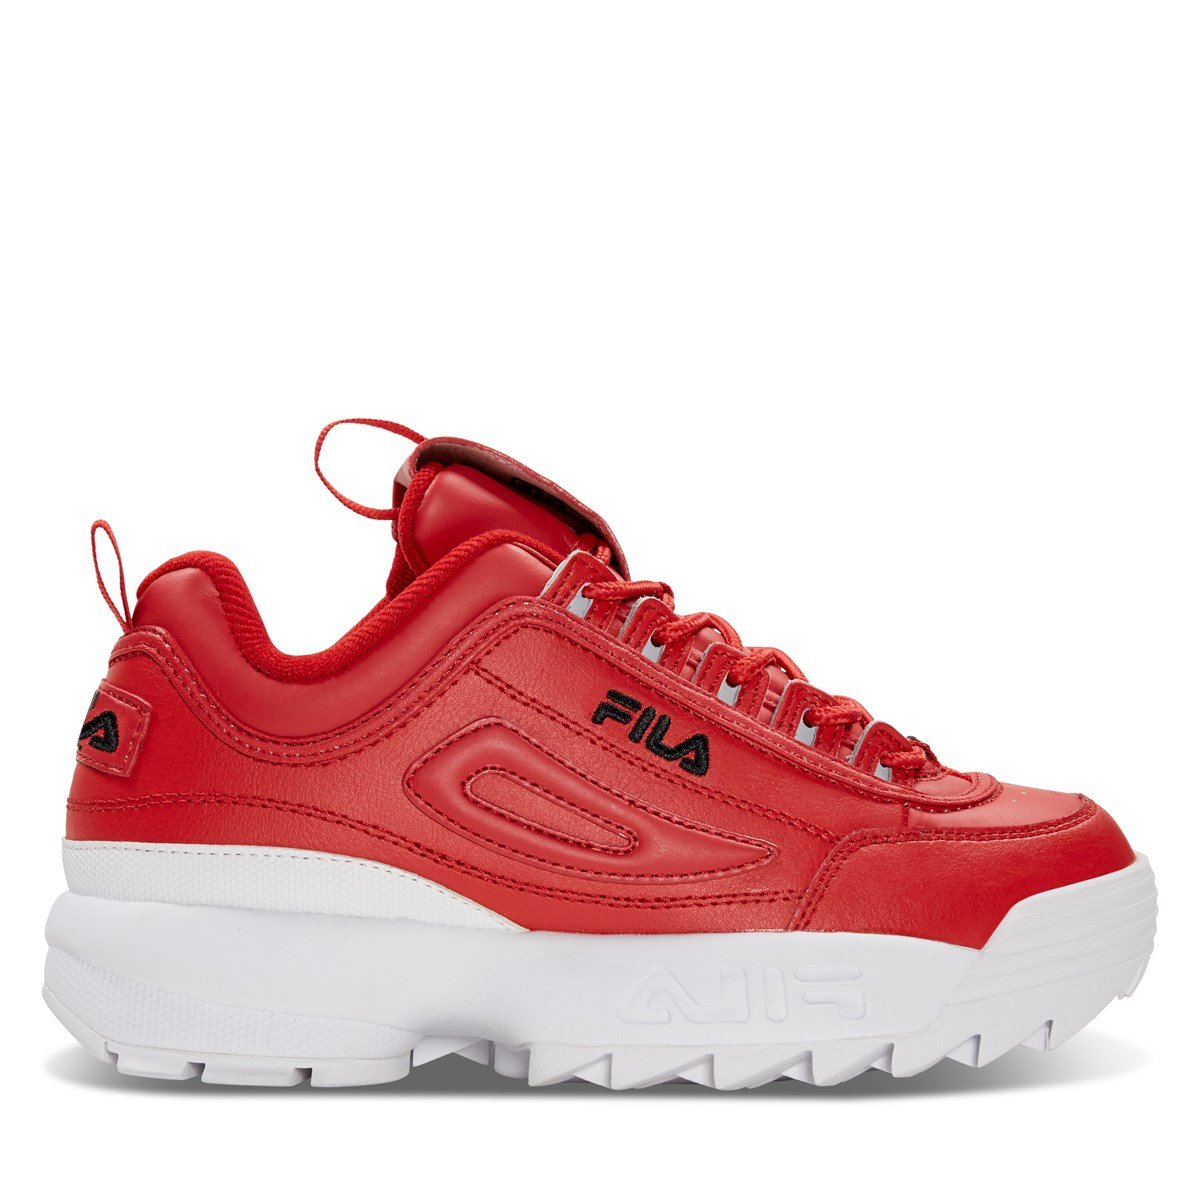 Disruptor II Premium Sneakers in Red 